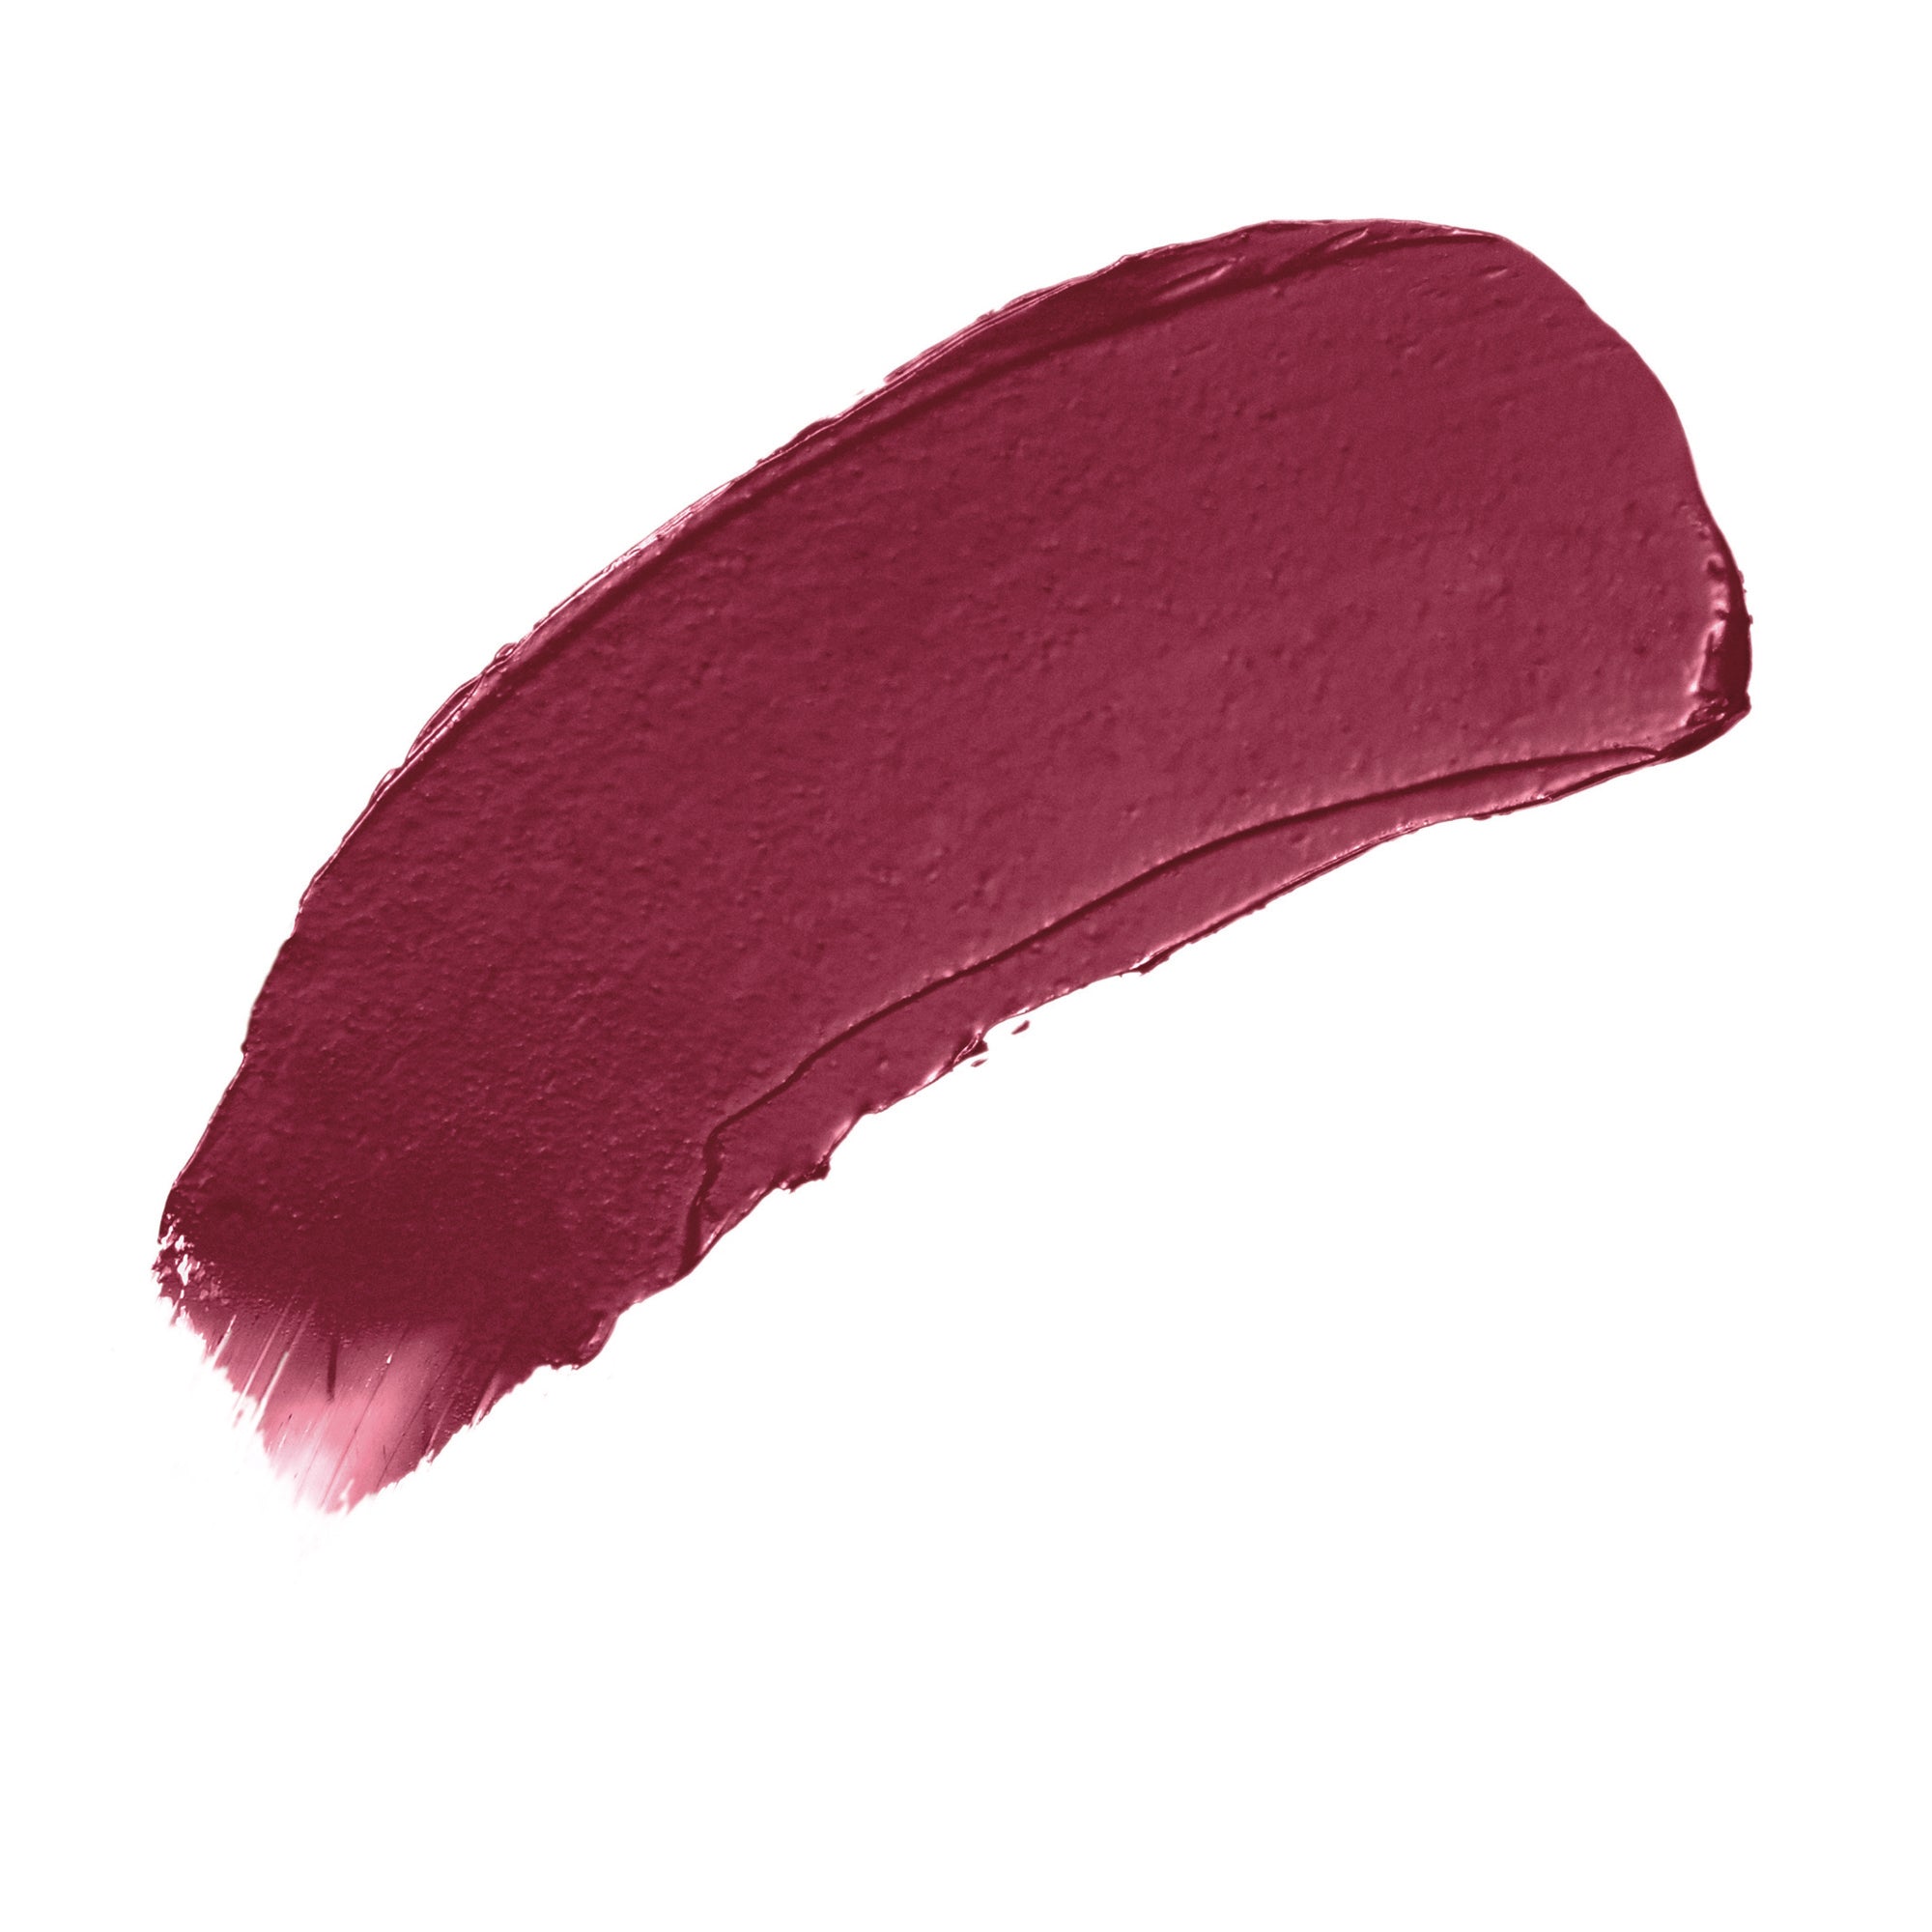 Jane Iredale Triple Luxe Long Lasting Naturally Moist Lipstick / ELLA / Swatch